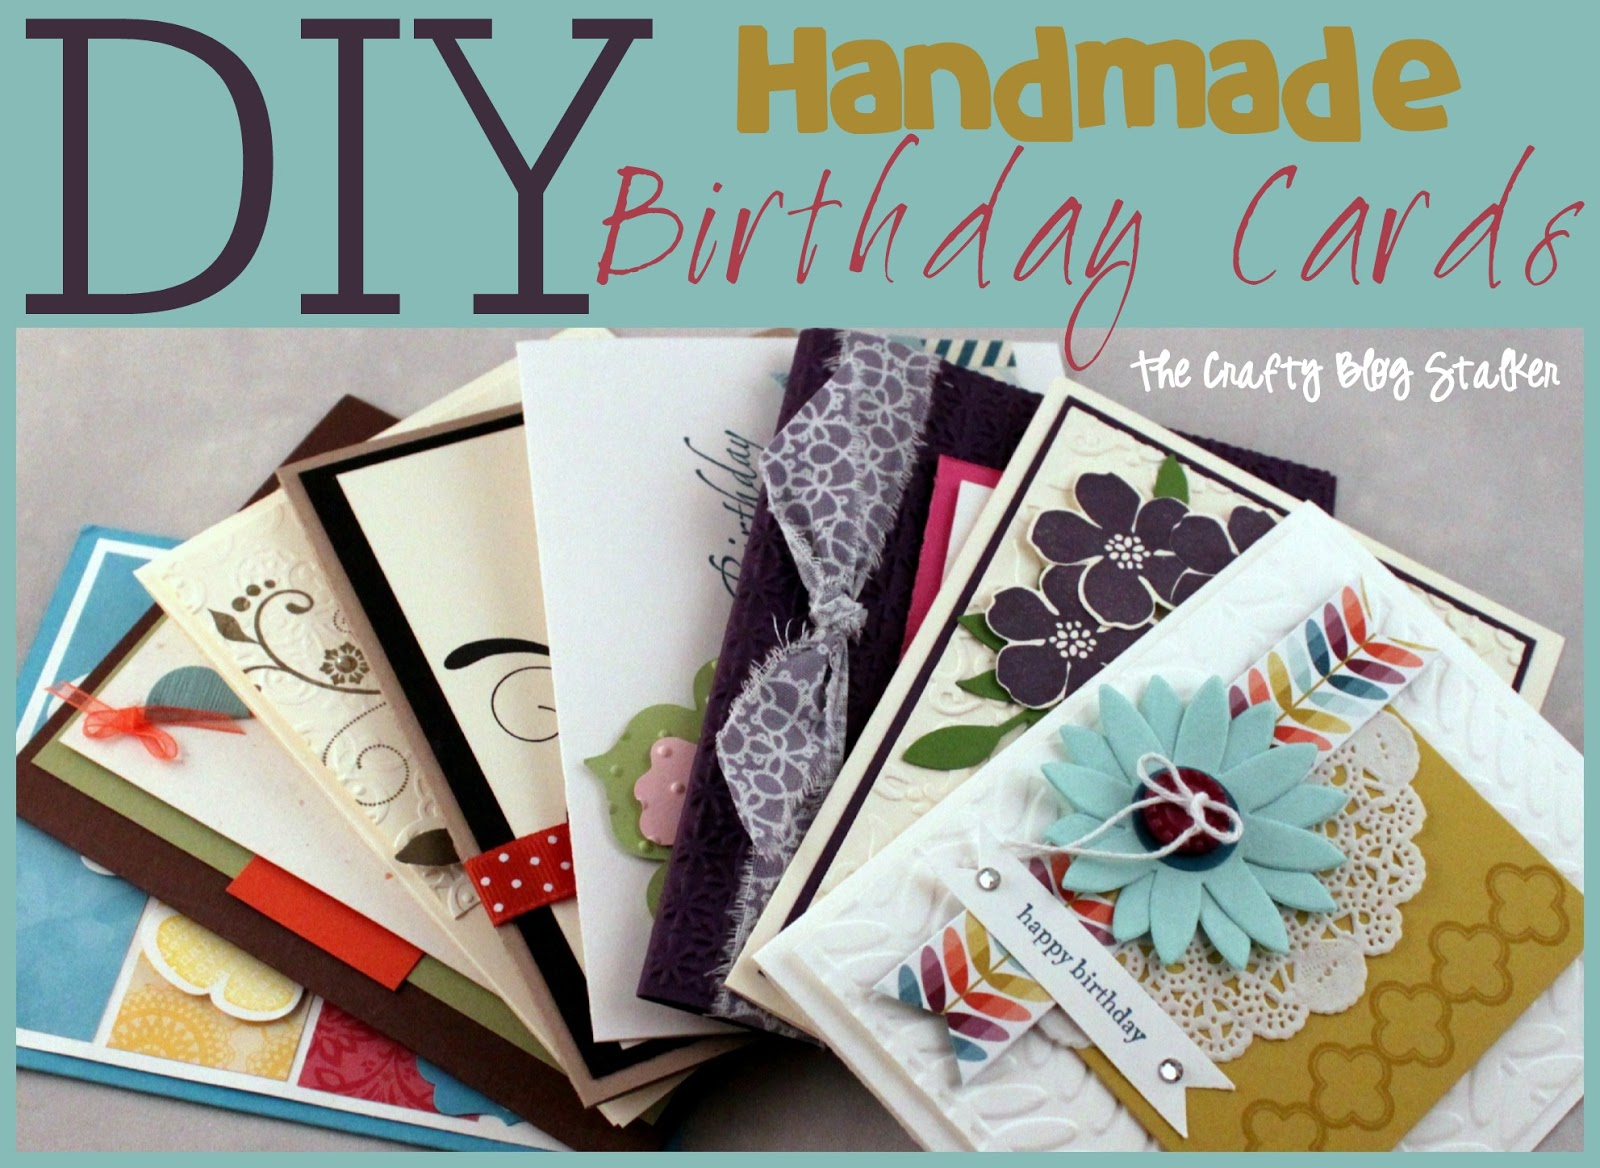 Amazing Birthday Card Ideas Handmade Birthday Card Ideas The Crafty Blog Stalker